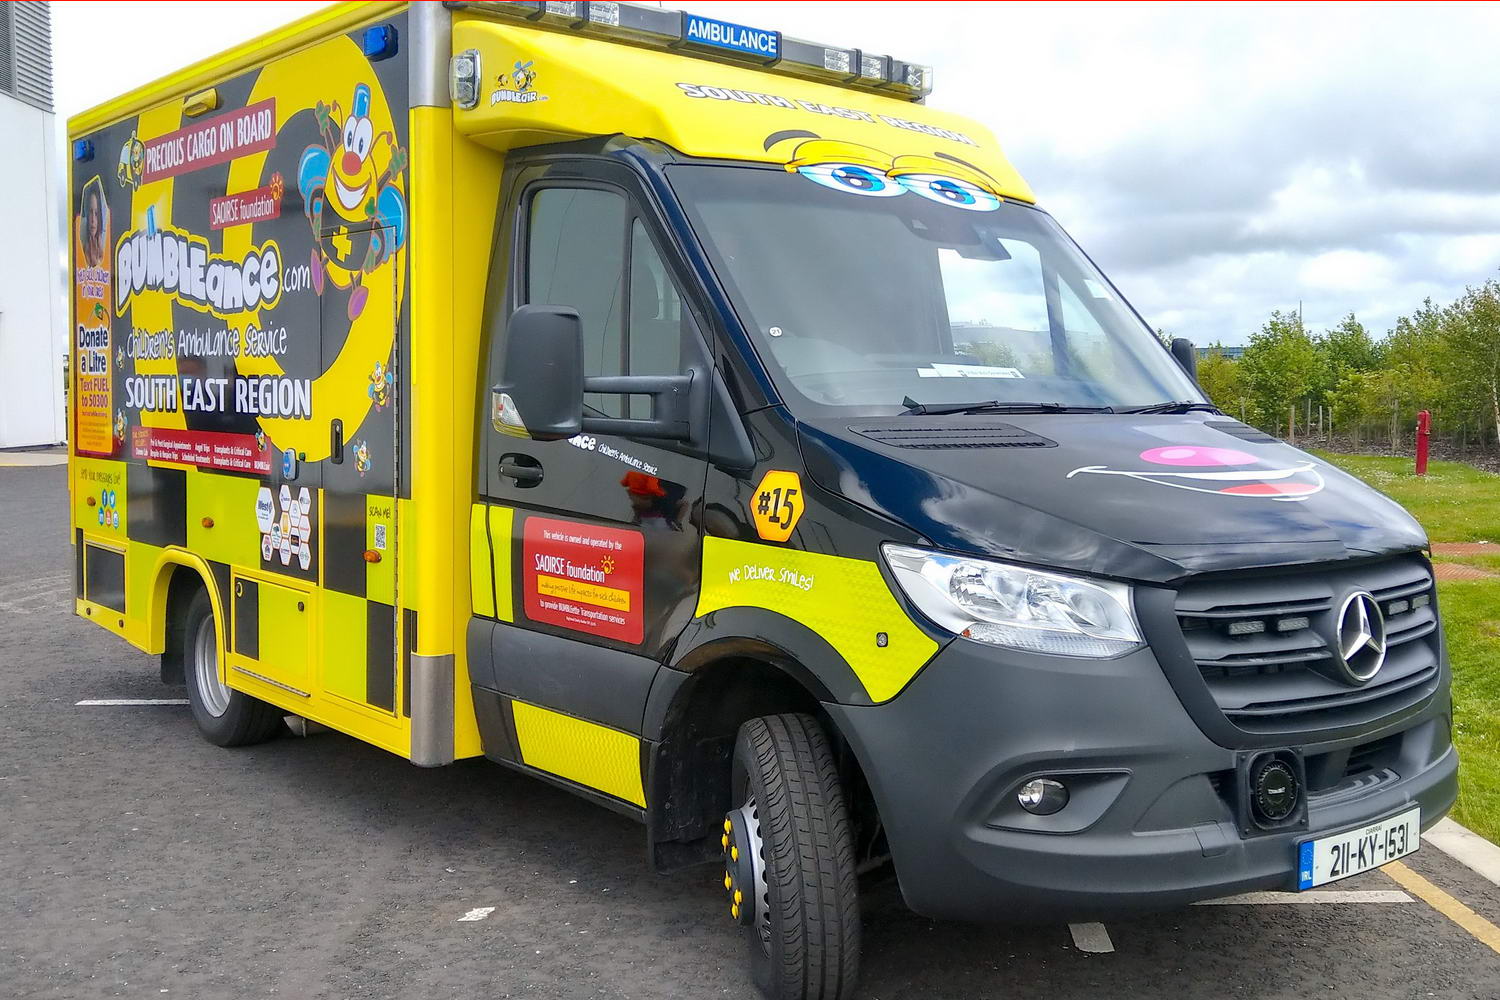 Van News | Expansion for ‘BUMBLEance’ children’s ambulance | CompleteVan.ie